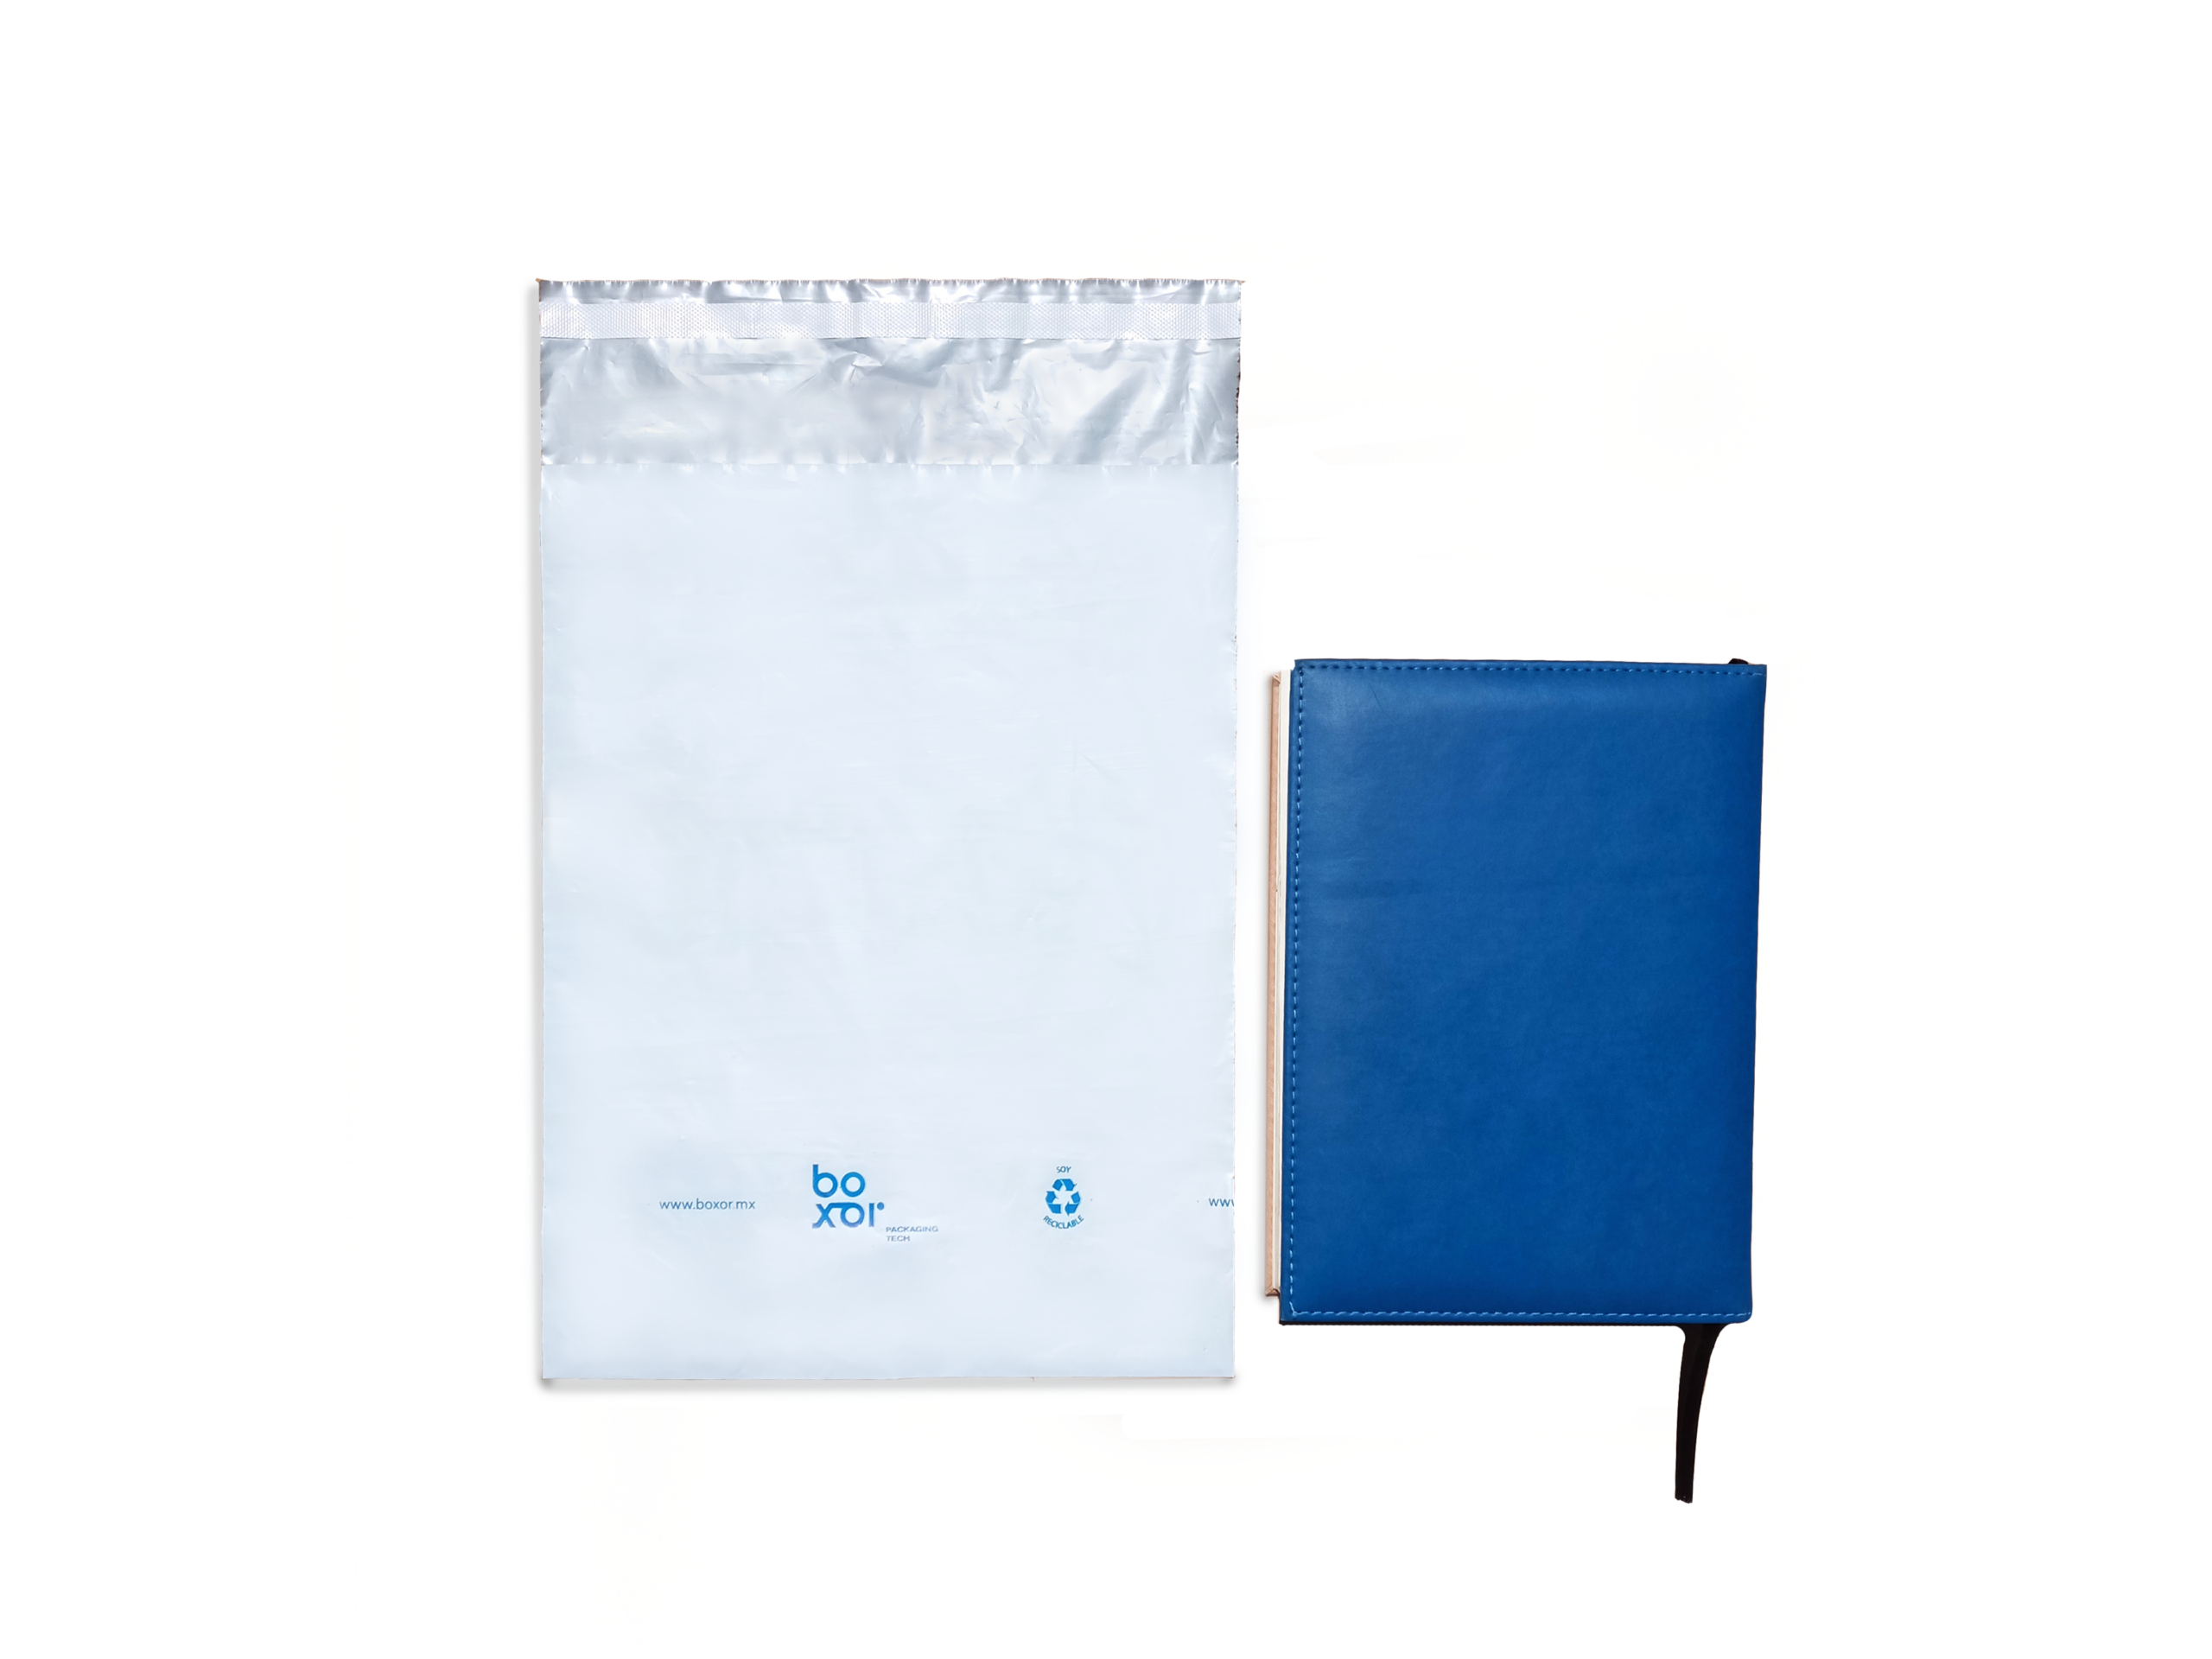 Paquete de 200 bolsas de envío de polietileno blancas - Envío seguro con  bolsas de polietileno de 9 x 12 pulgadas - Bolsas de polietileno de  comercio